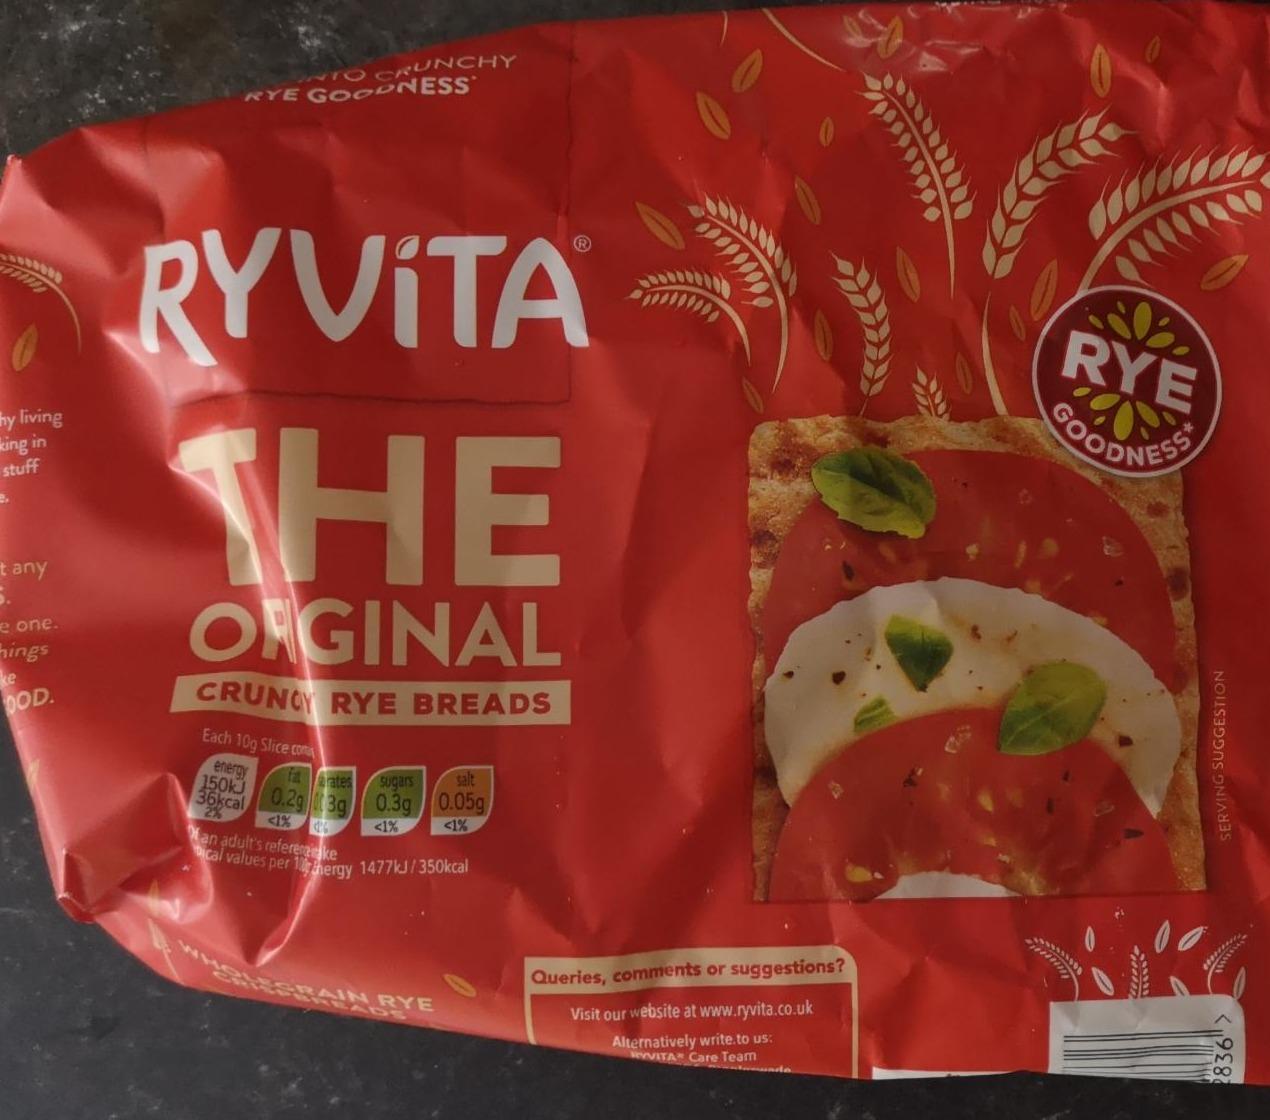 Fotografie - The Original Crunchy Rye Breads Ryvita